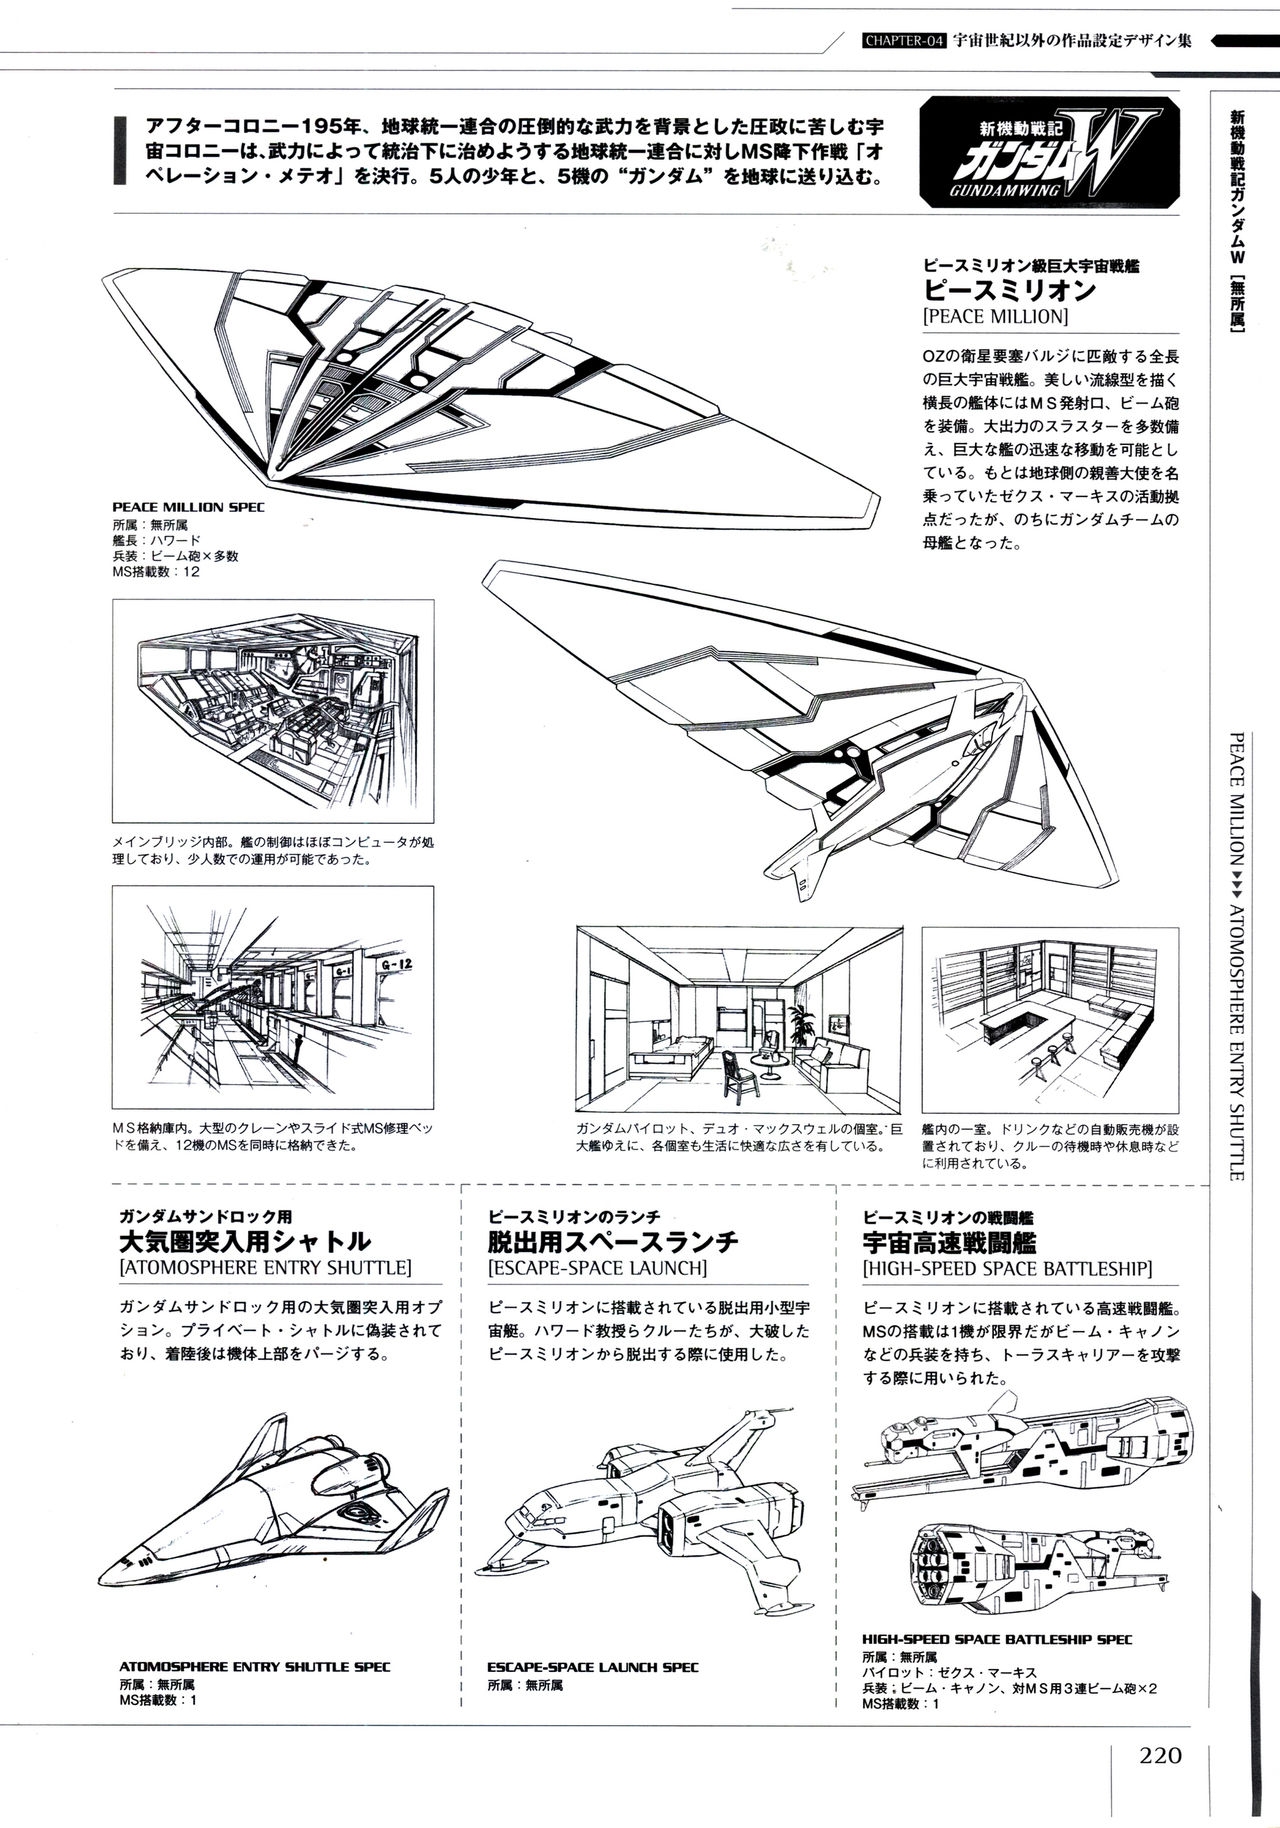 Mobile Suit Gundam - Ship & Aerospace Plane Encyclopedia - Revised Edition 225